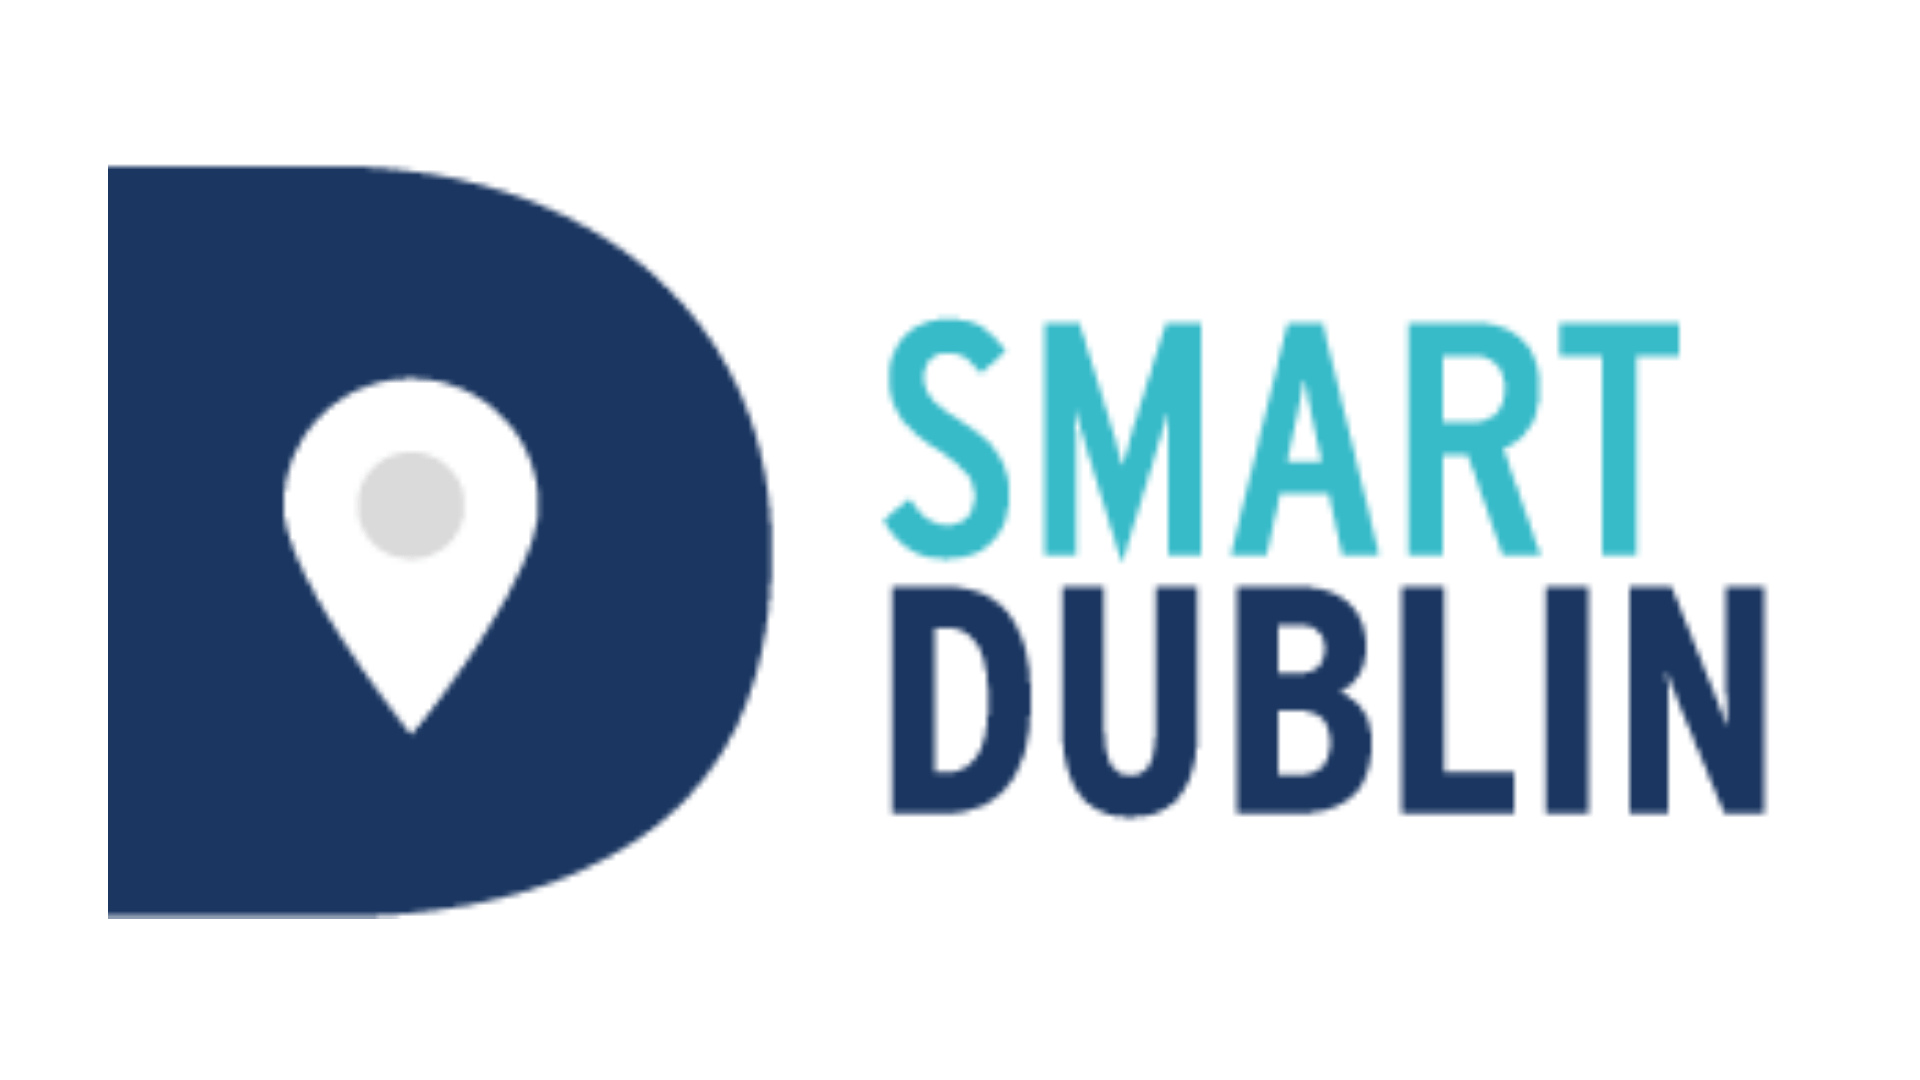 Smart Dublin